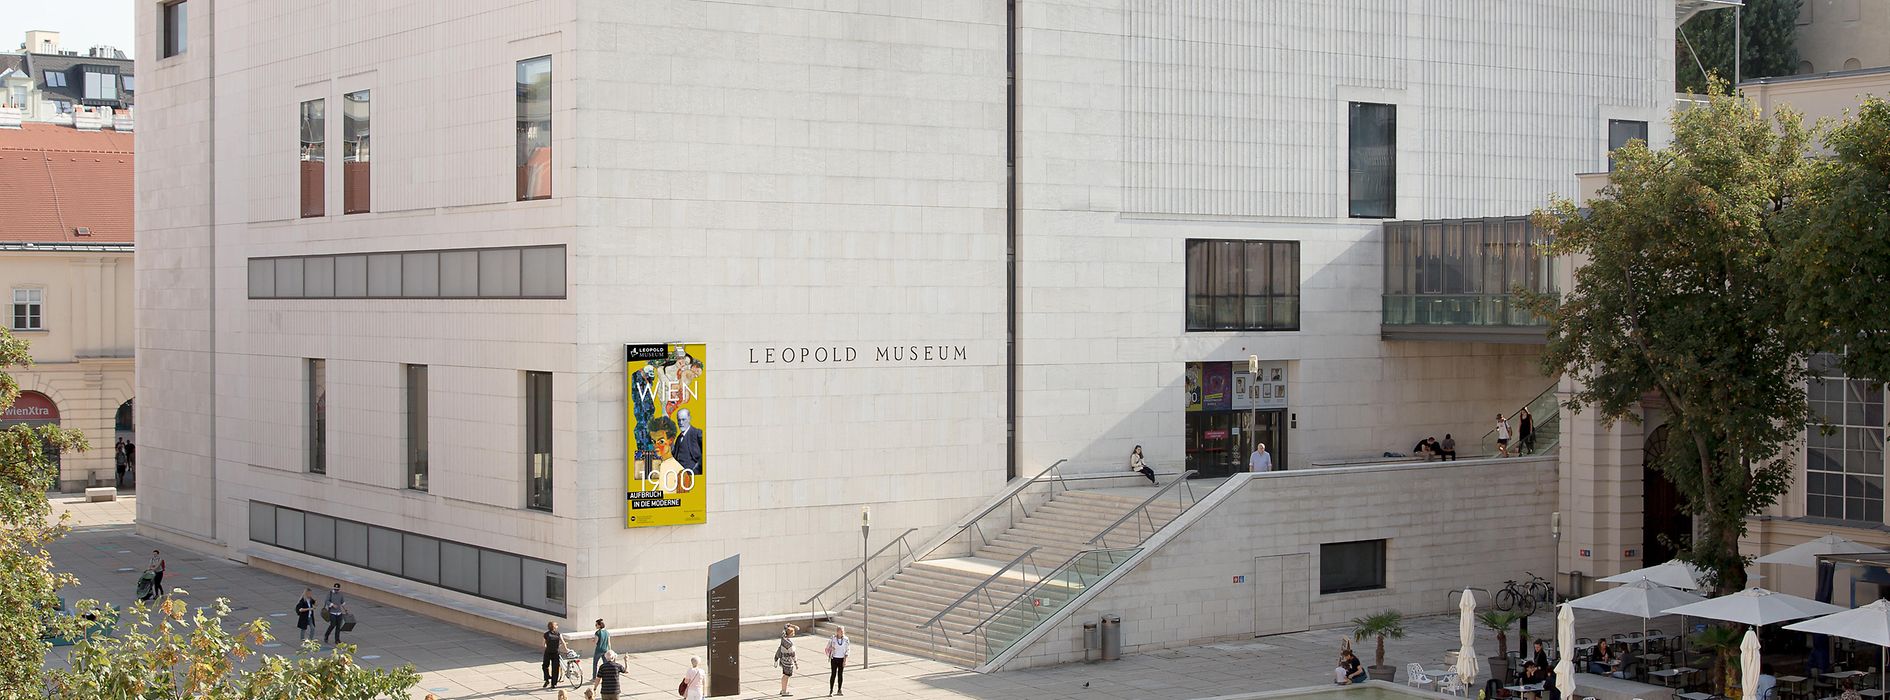 Museumsquartier, Leopold Museum, exterior view